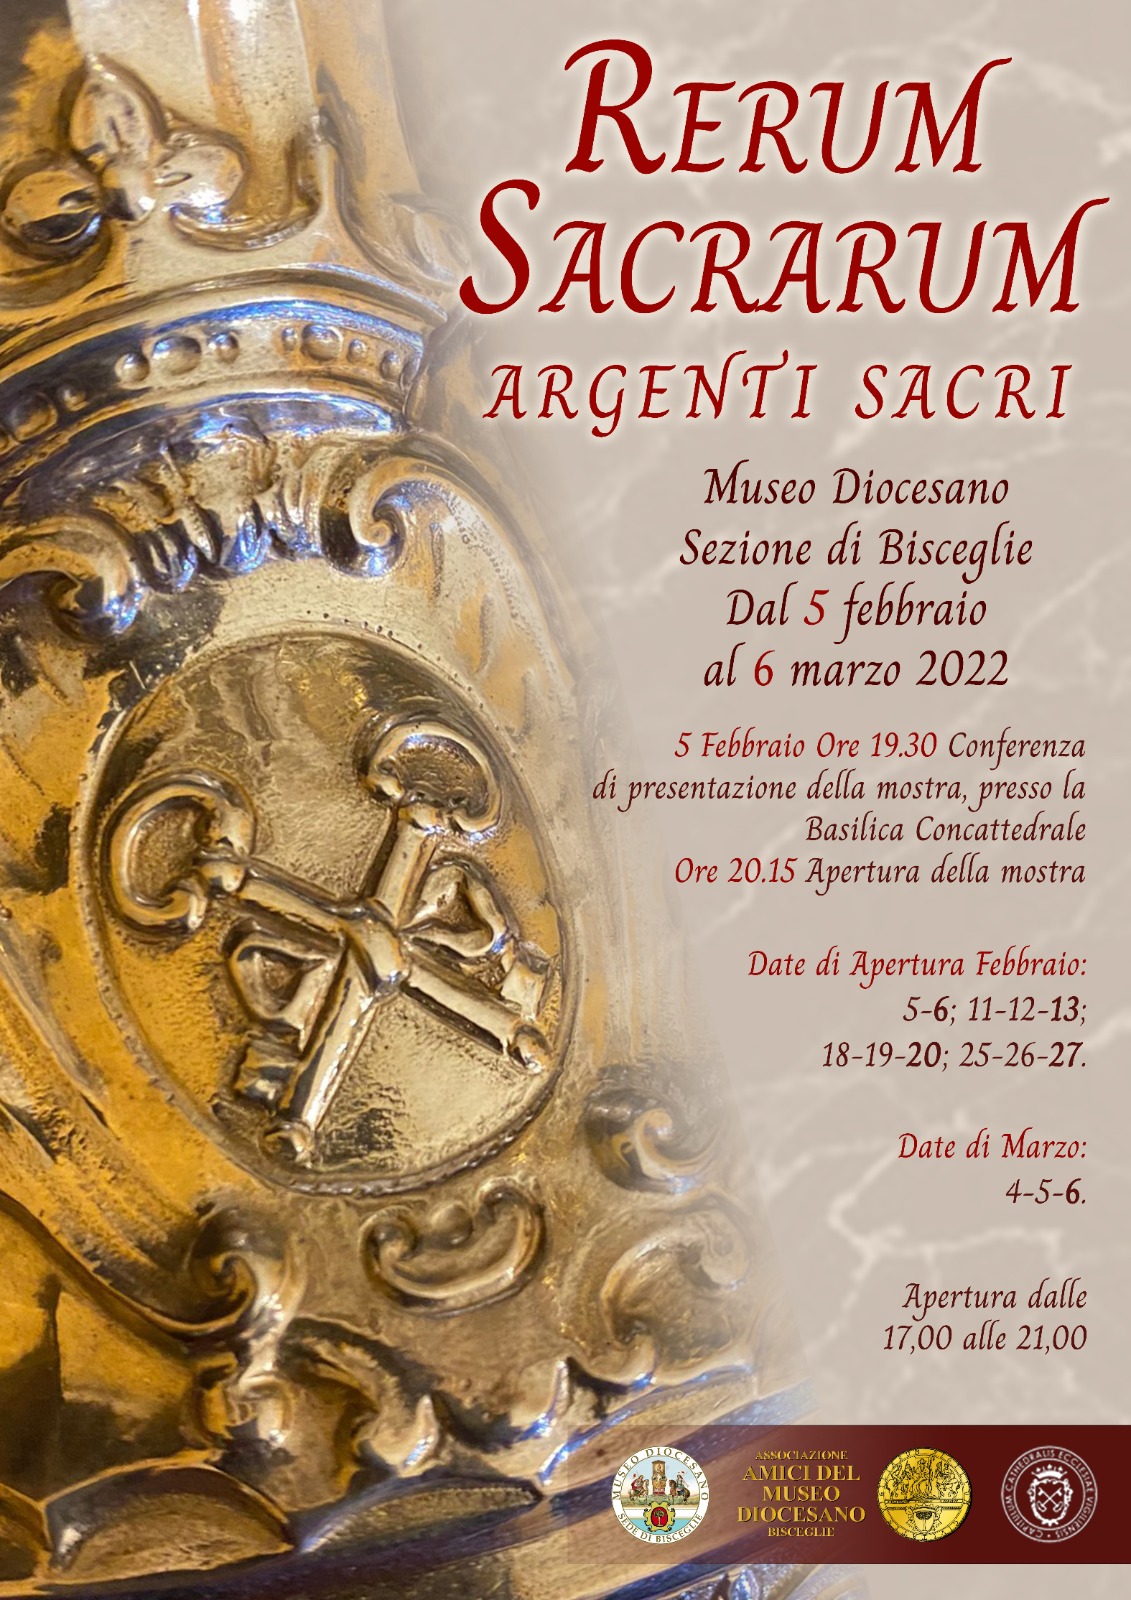 Bisceglie, Rerum Sacrarum: la mostra degli argenti sacri